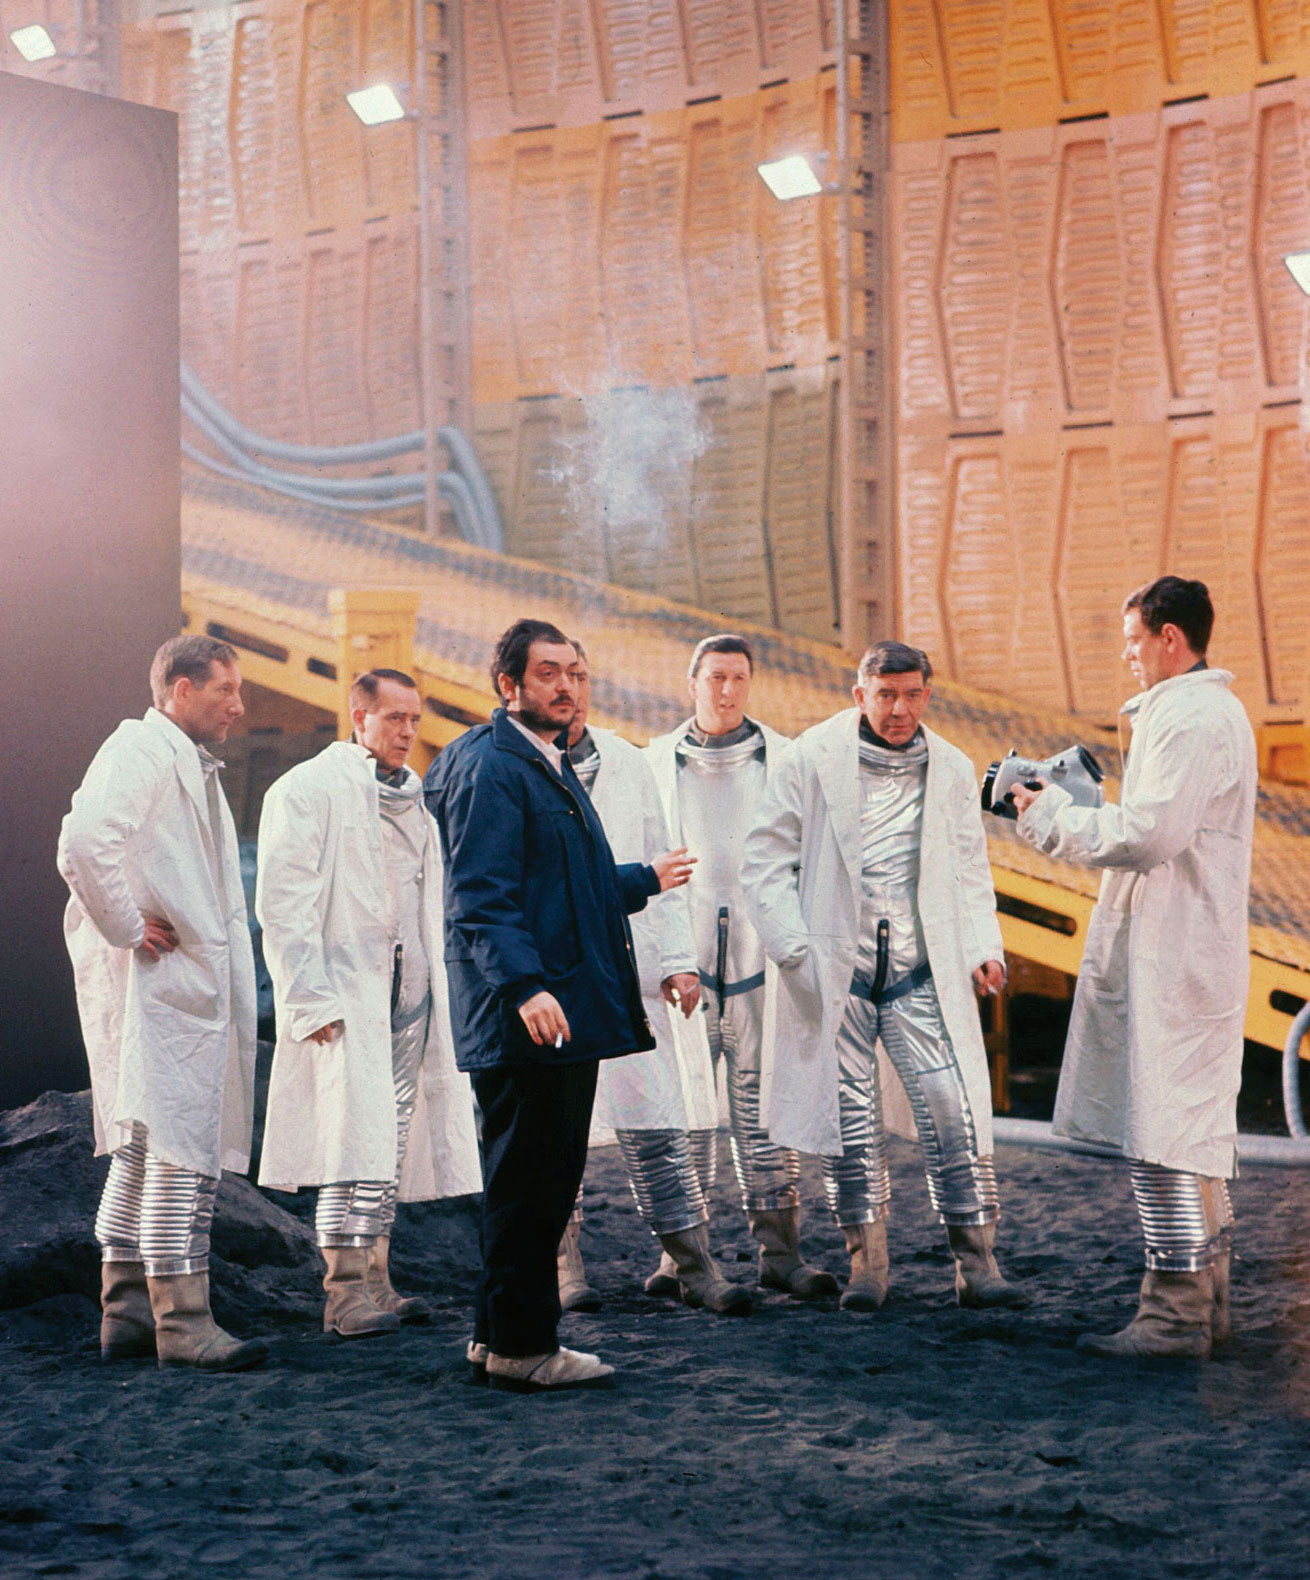 Stanley-Kubrick-scene-2001-A-Space-Odyssey-2001.jpg